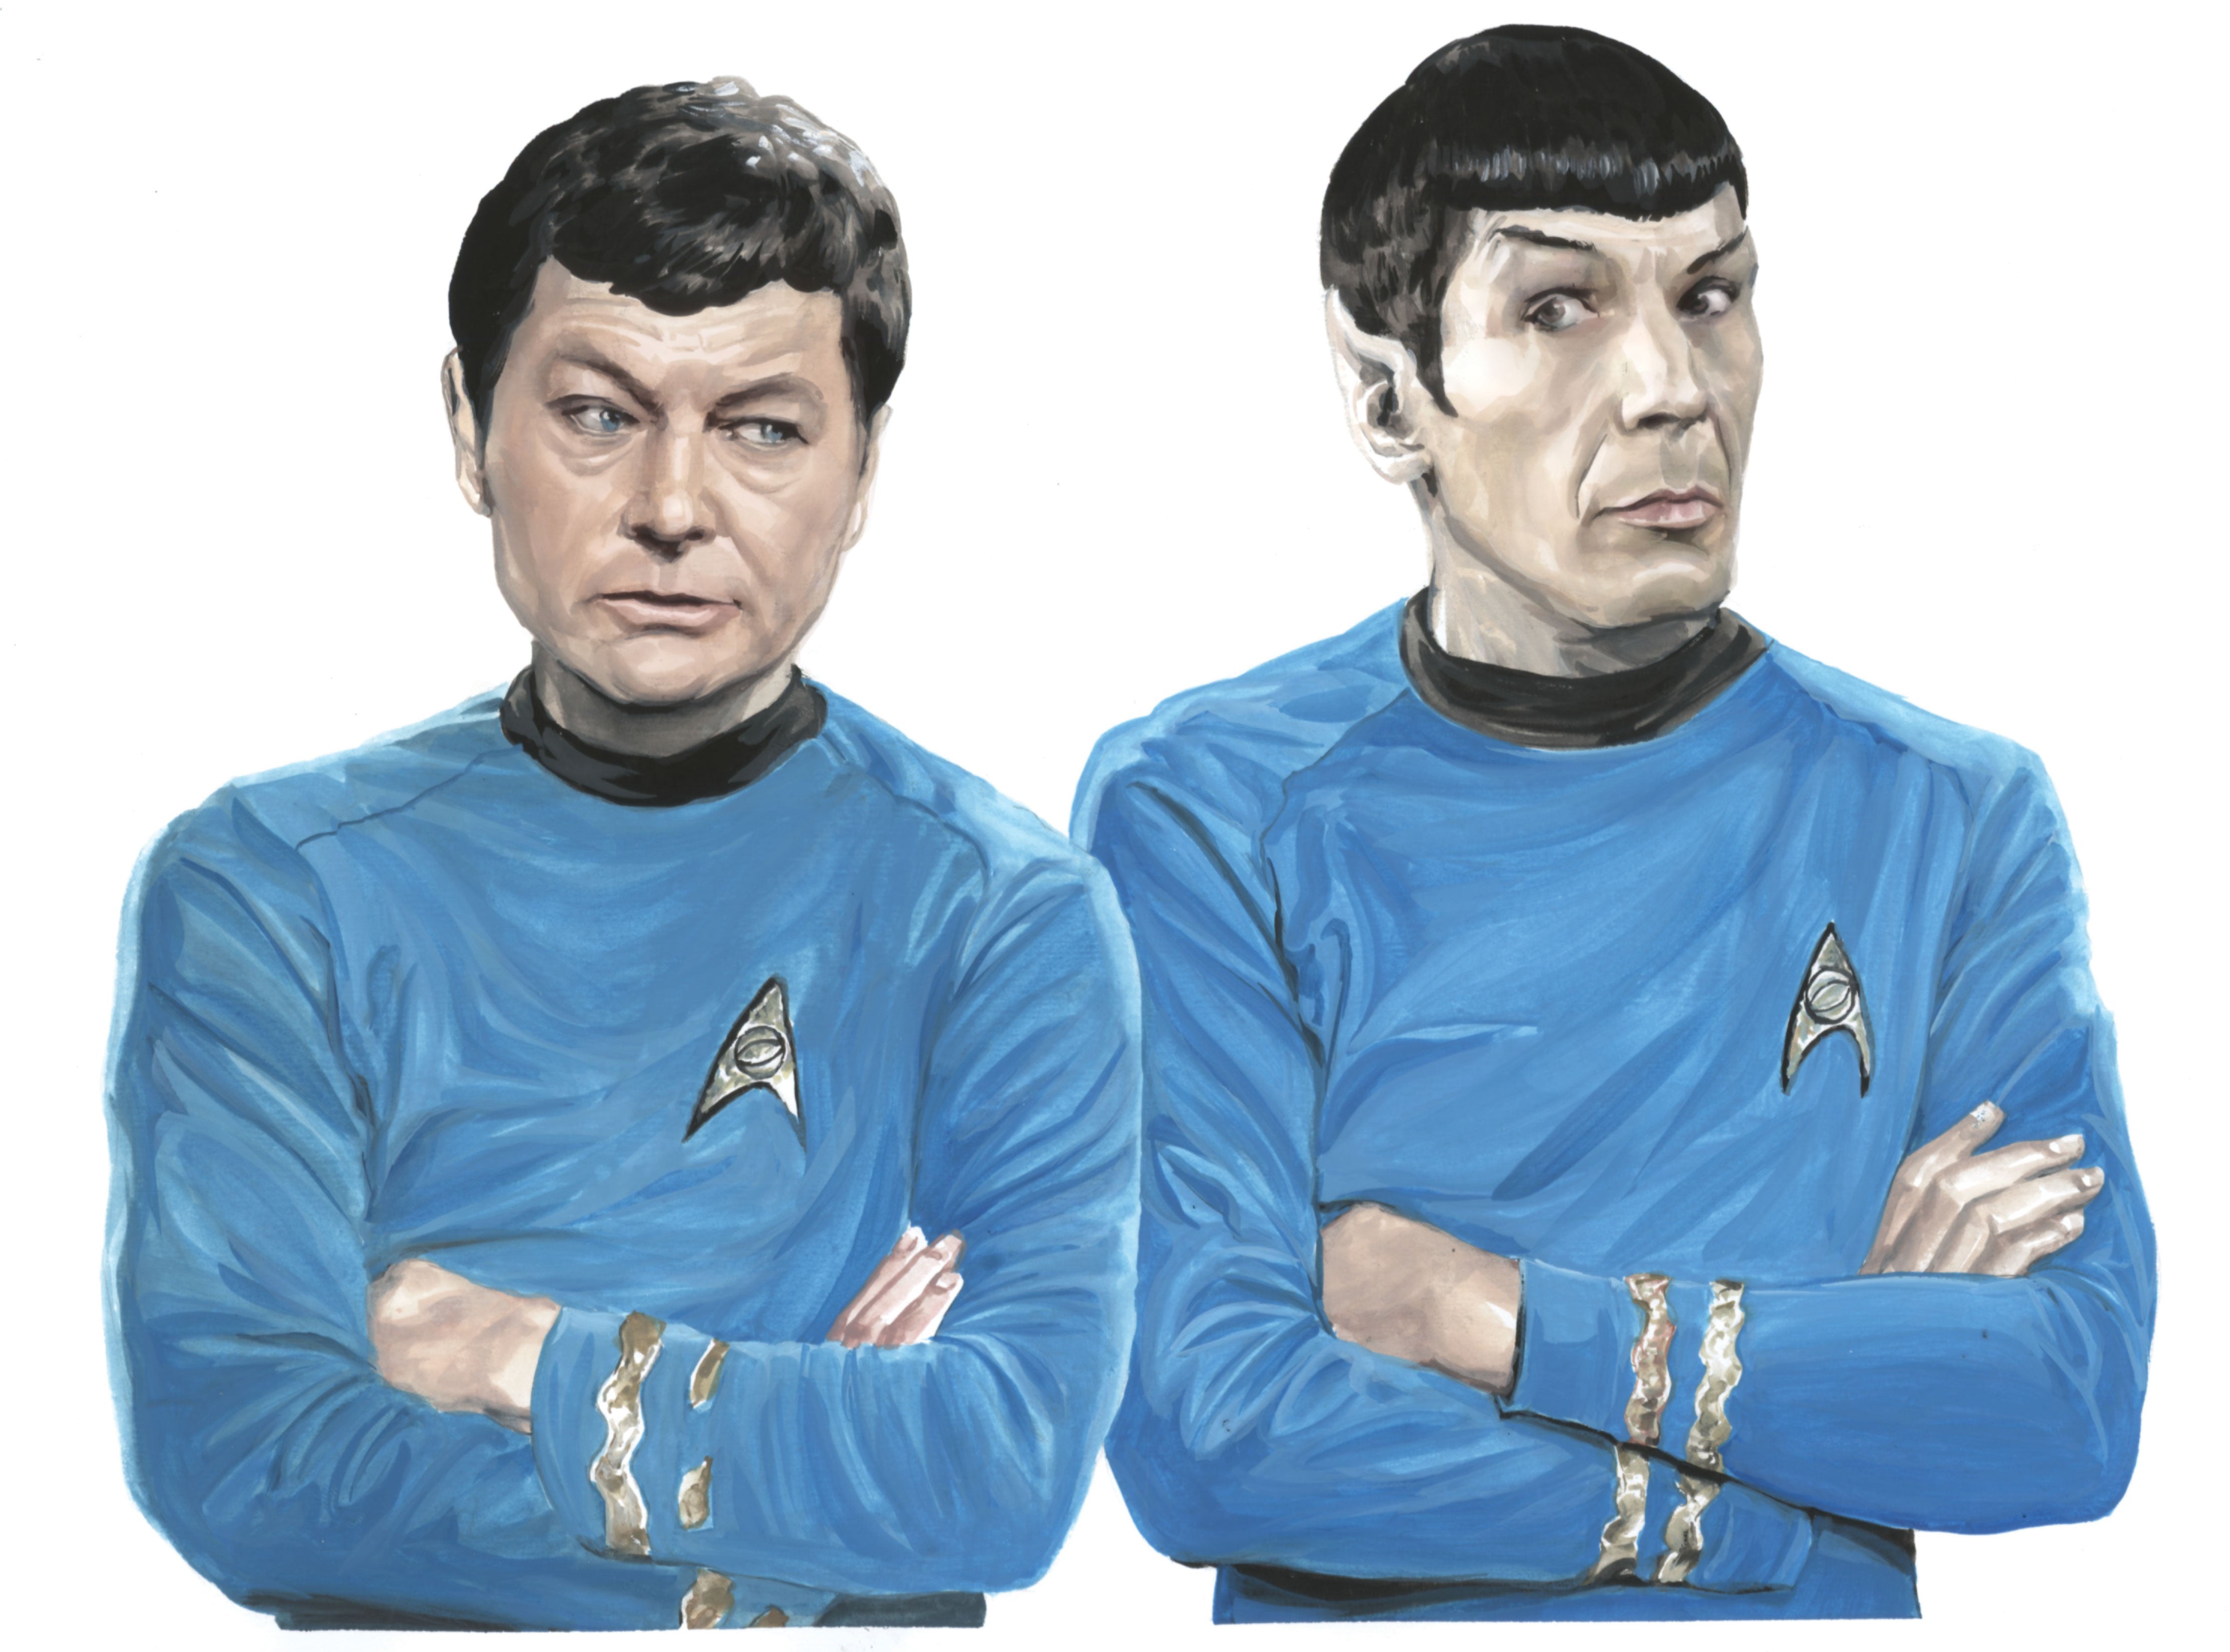 Bones and Spock by J.K. Woodward. (Image: BenBella Books)